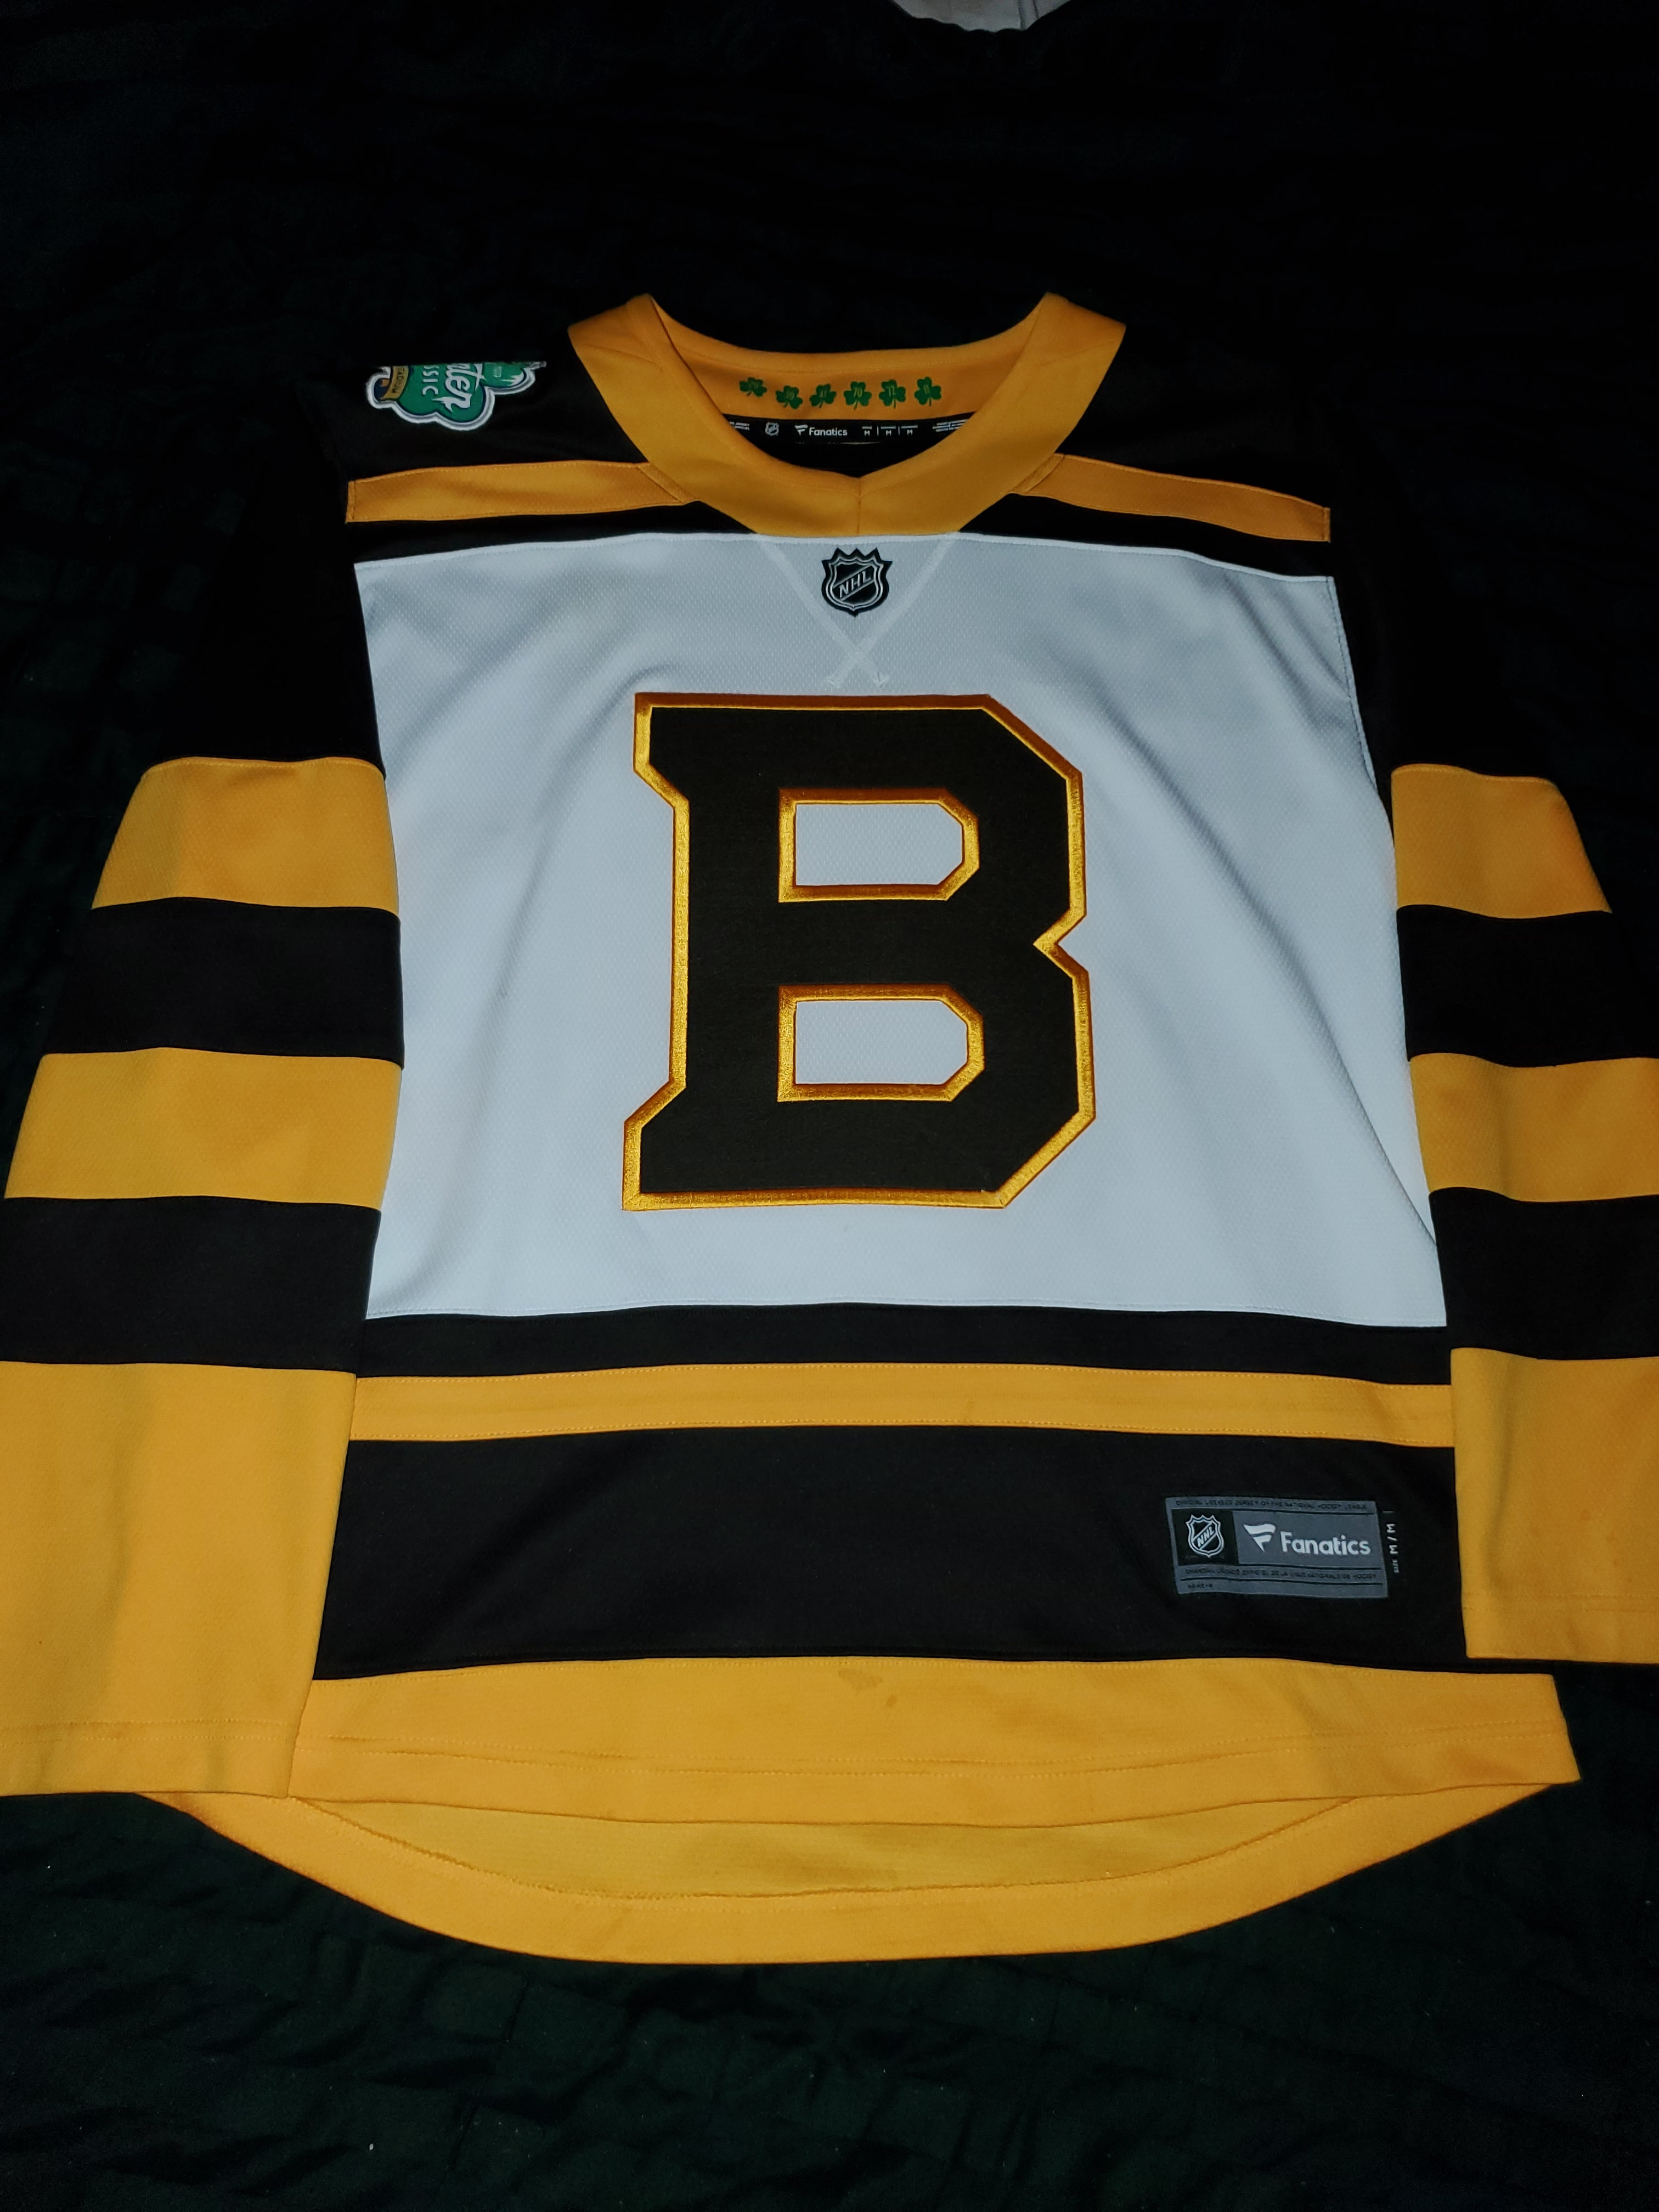 Boston Bruins Fanatics 2019 Winter Classic Jersey (Size Medium)